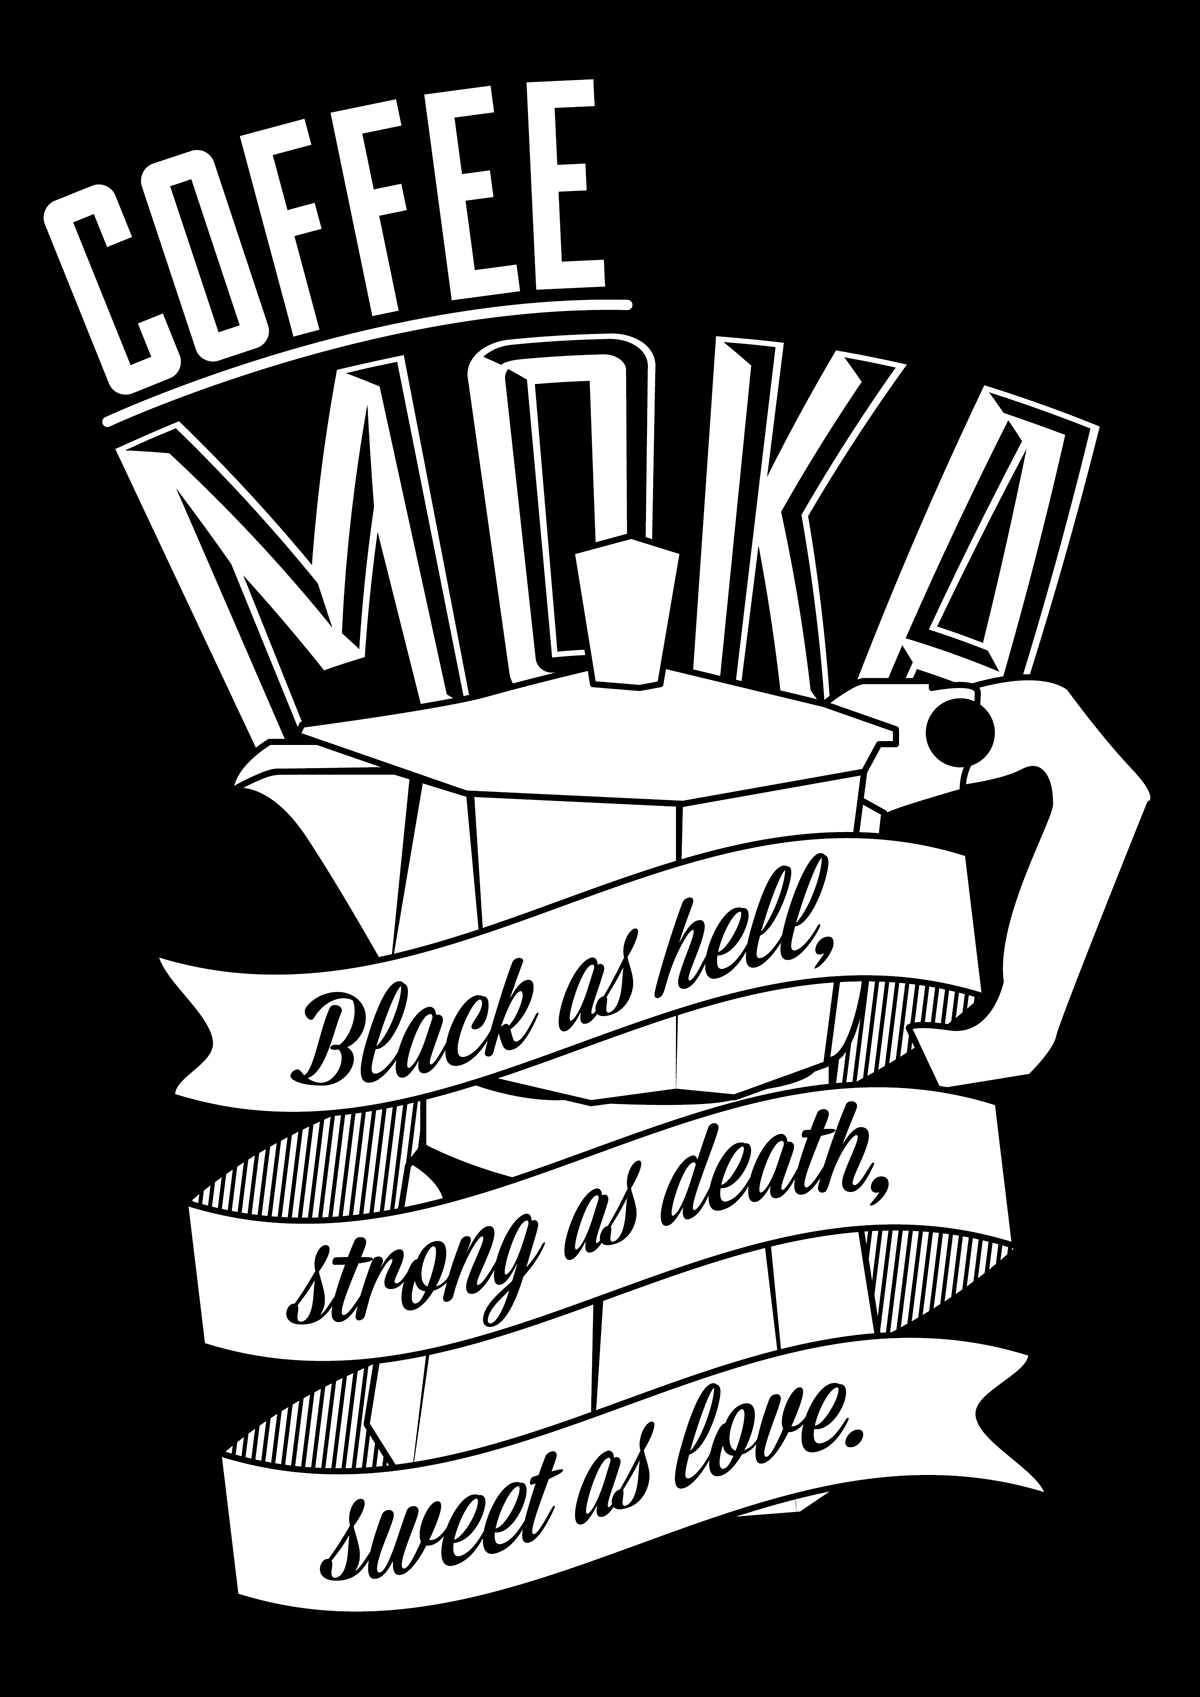 Coffee moka caffe ribbon